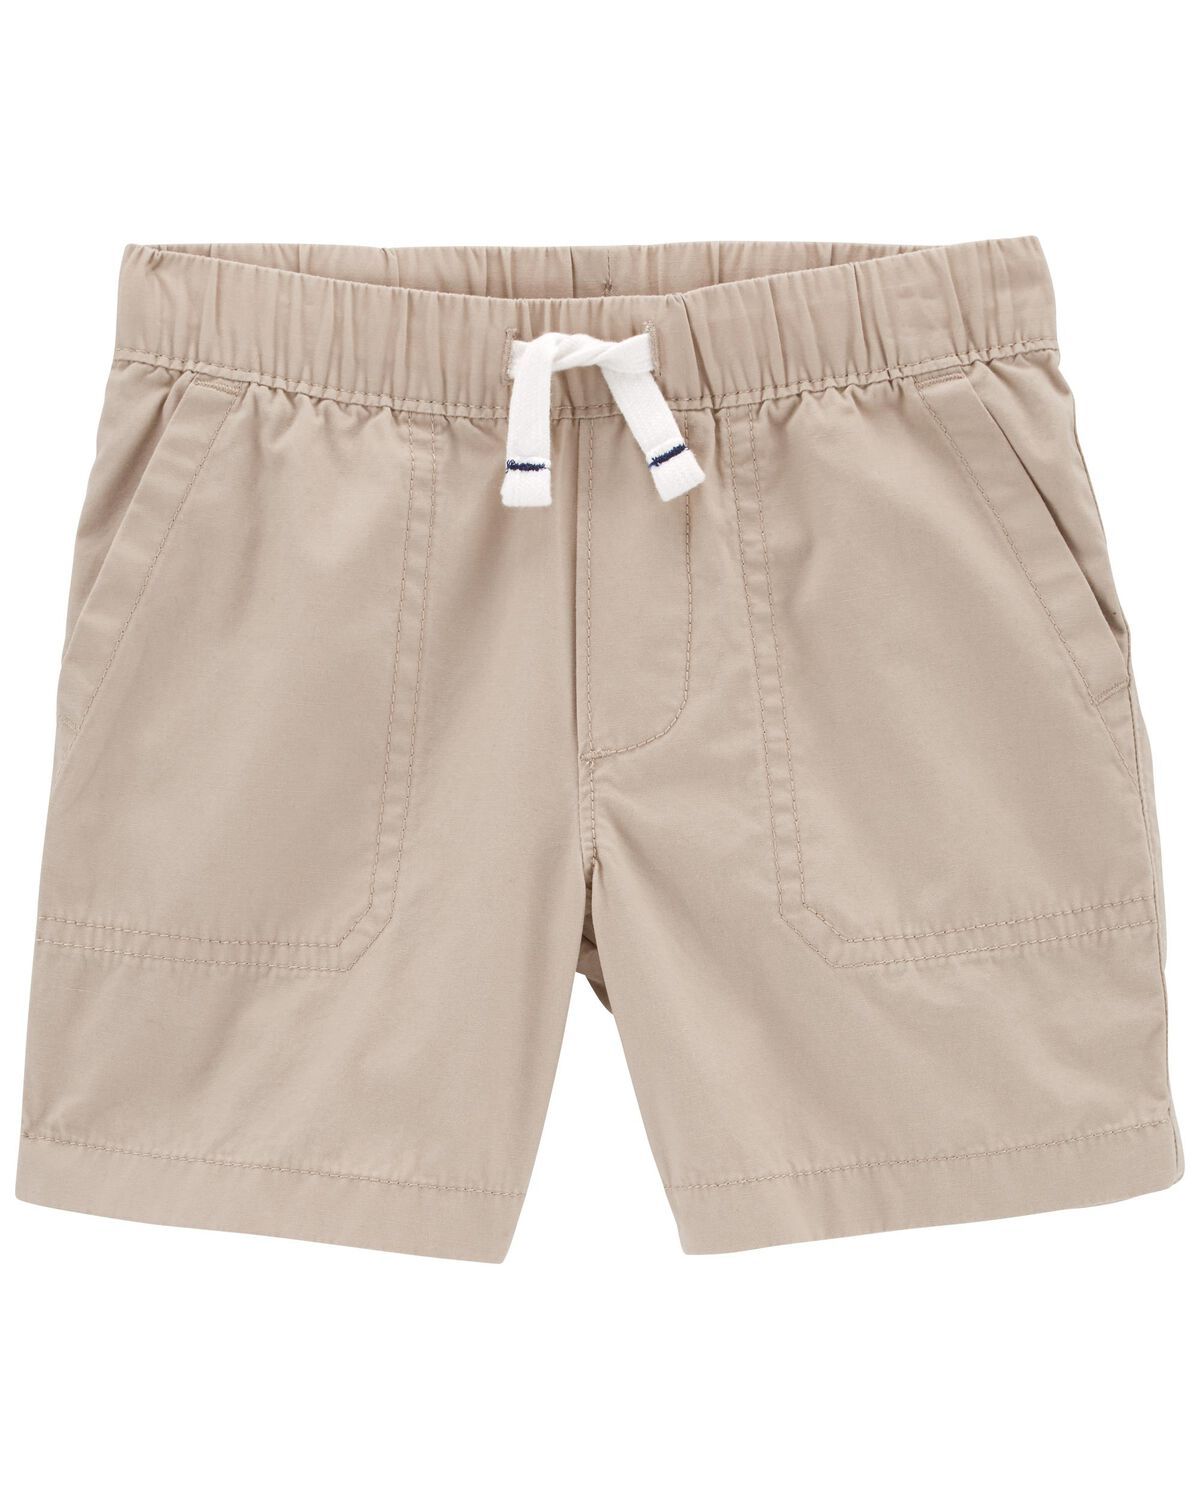 Khaki Baby Pull-On Poplin Shorts | carters.com | Carter's